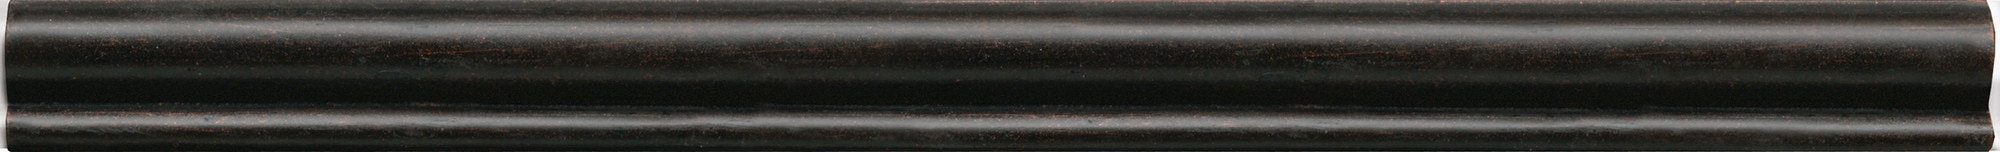 Oil Rub Bronze, Ogee, 1X12, Satin